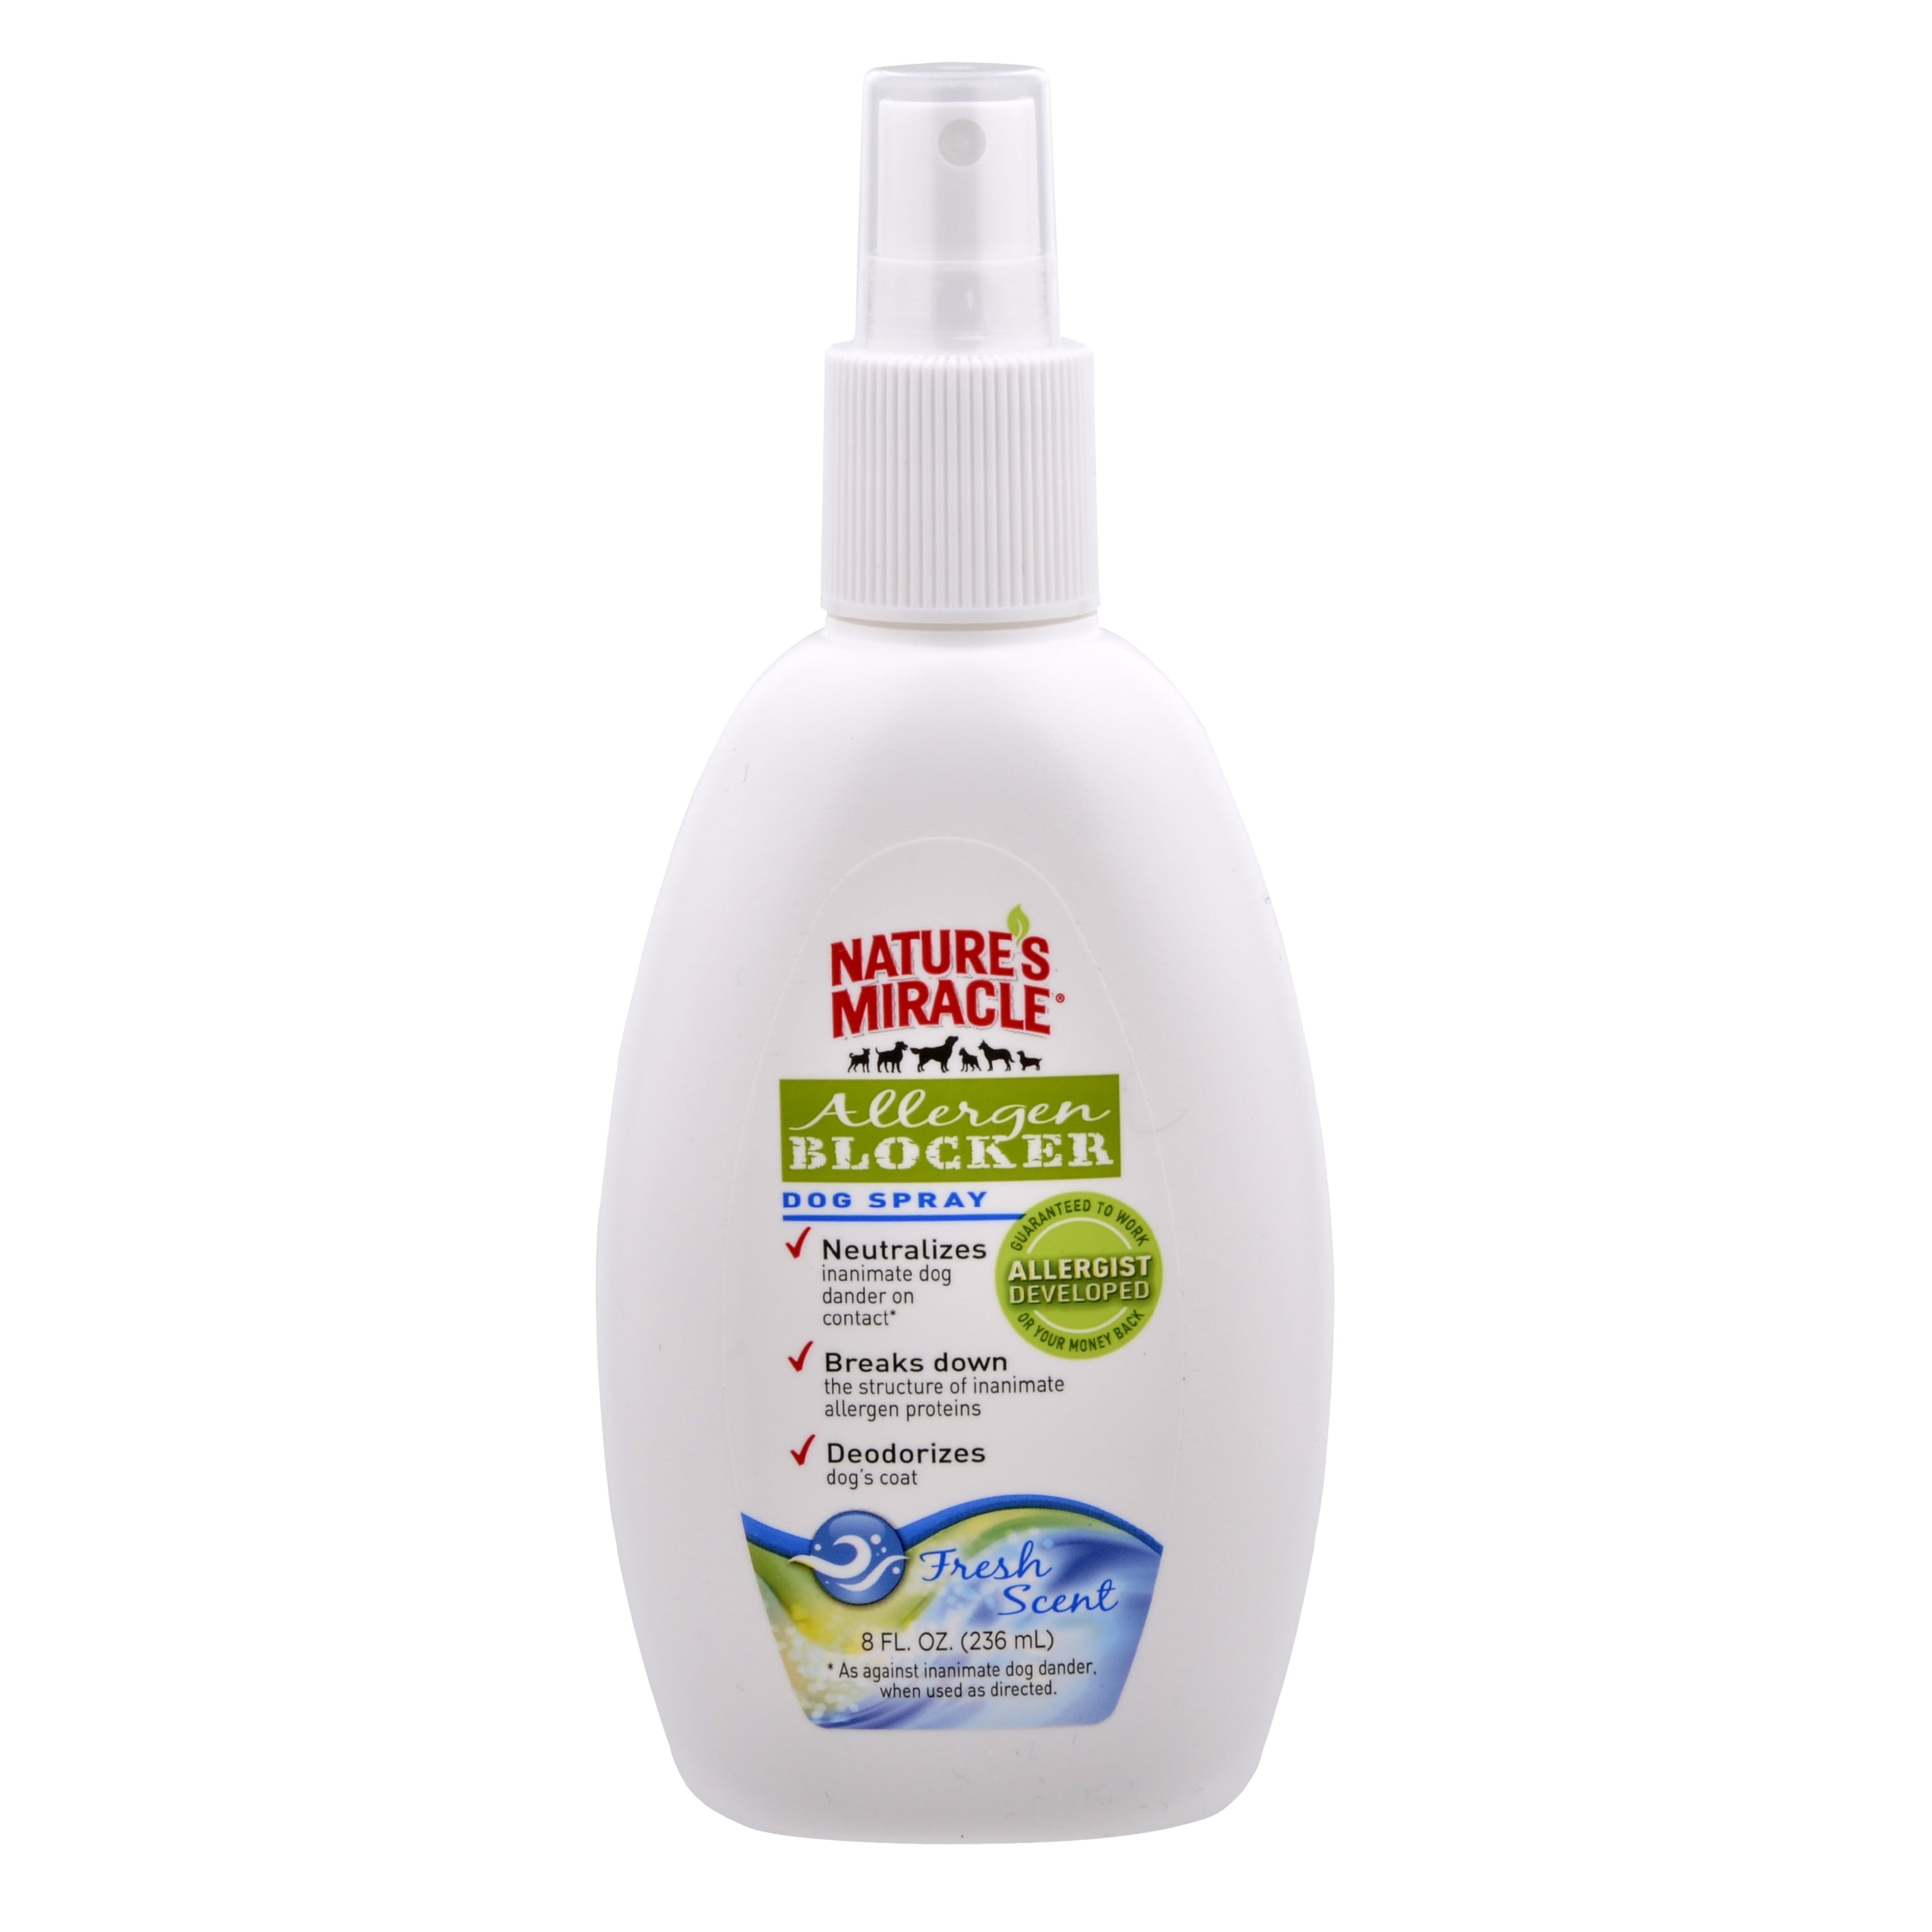 Nature's Miracle Advanced Platinum Dog Pet Block Repellent Spray, 16 fl.  oz.